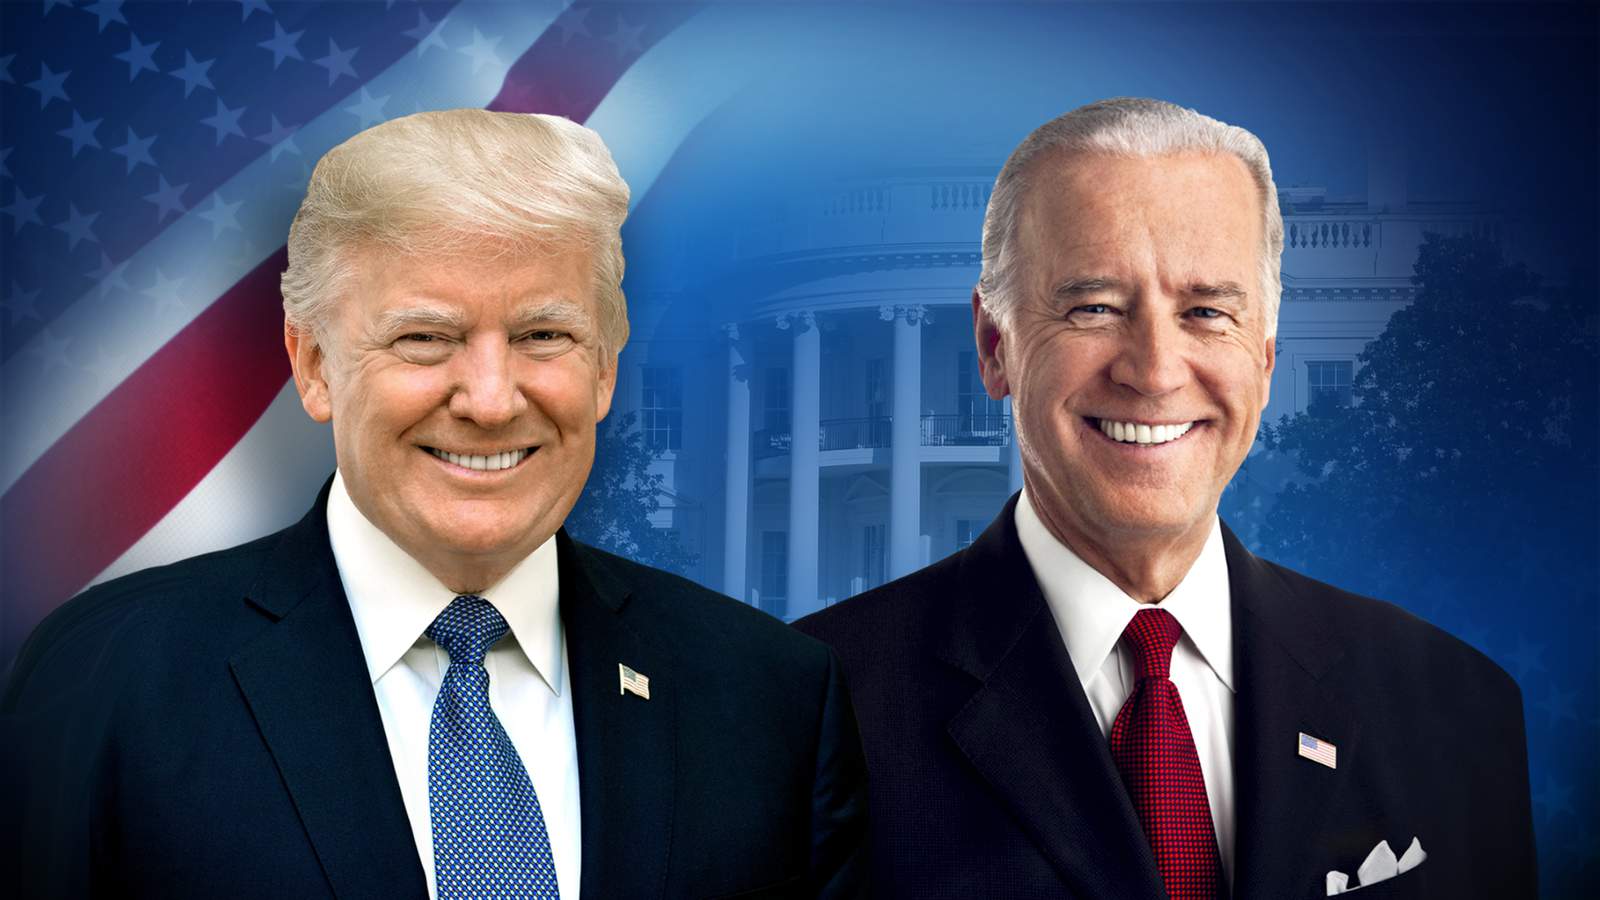 Biden wins Wisconsin and Michigan, narrowing Trump’s path